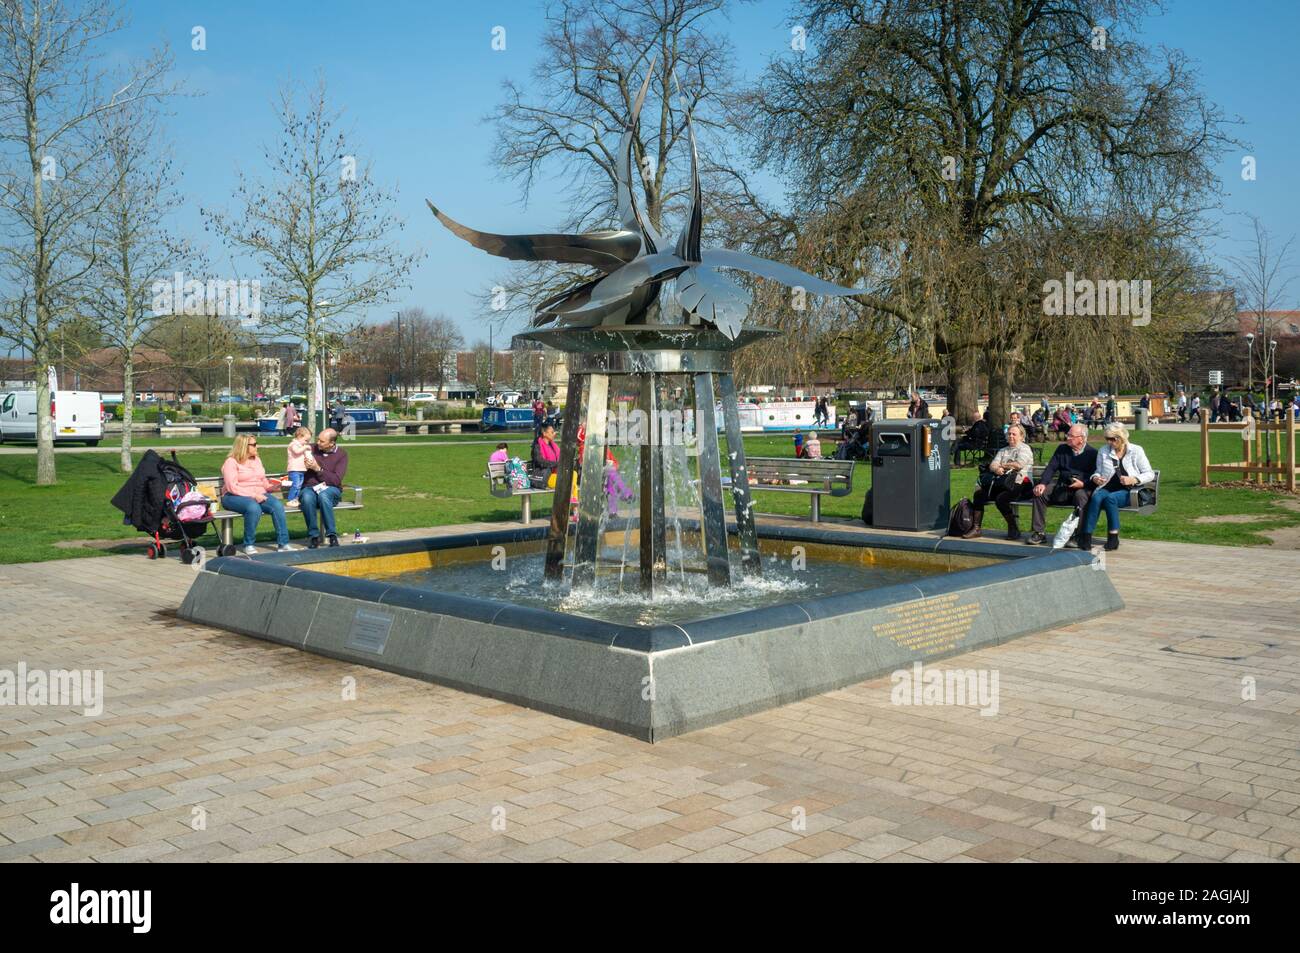 Tourists enjoying a day out in Bancroft Gardens, Stratford upon Avon, UK Stock Photo